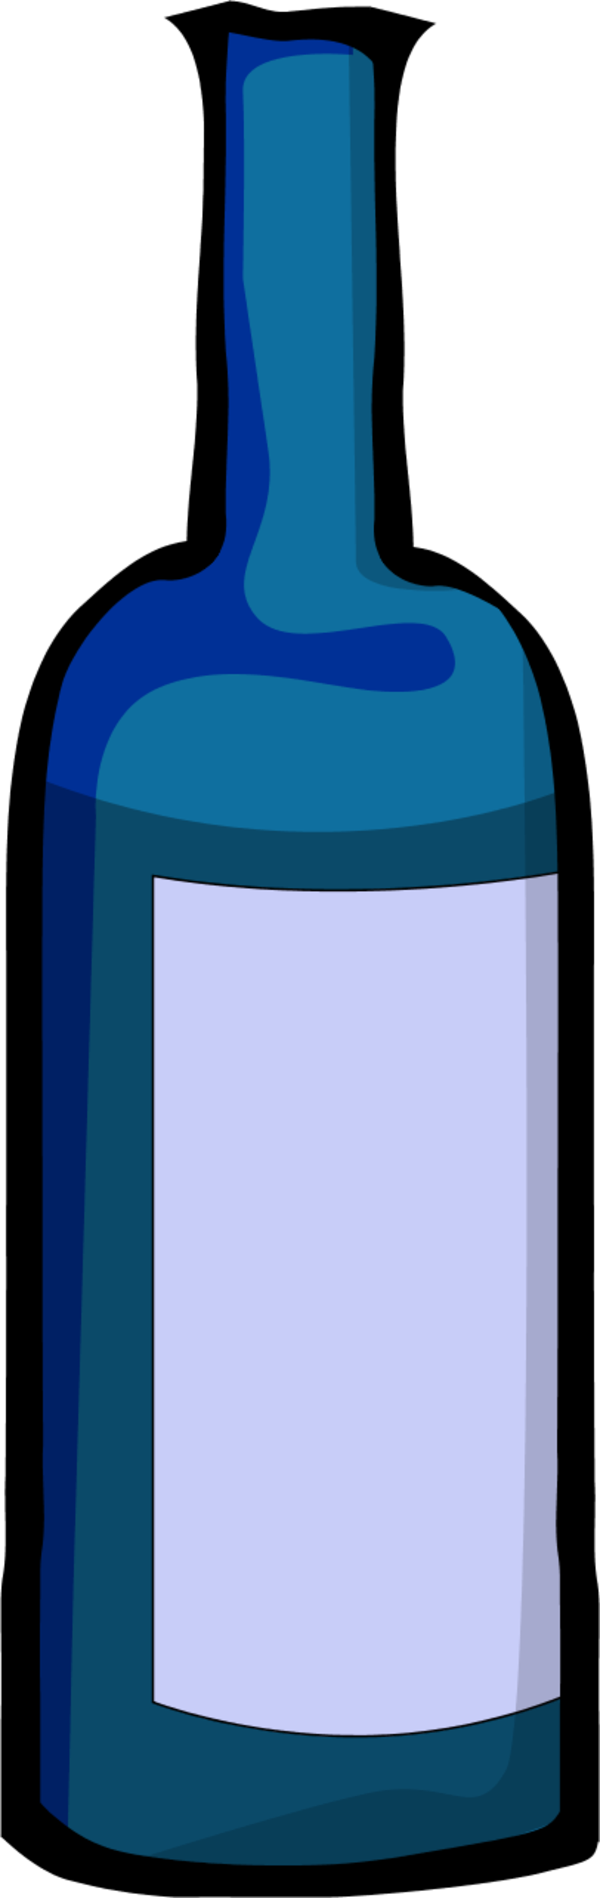 Wine Bottle Clipart - Blue Wine Bottle Clip Art (600x1898)